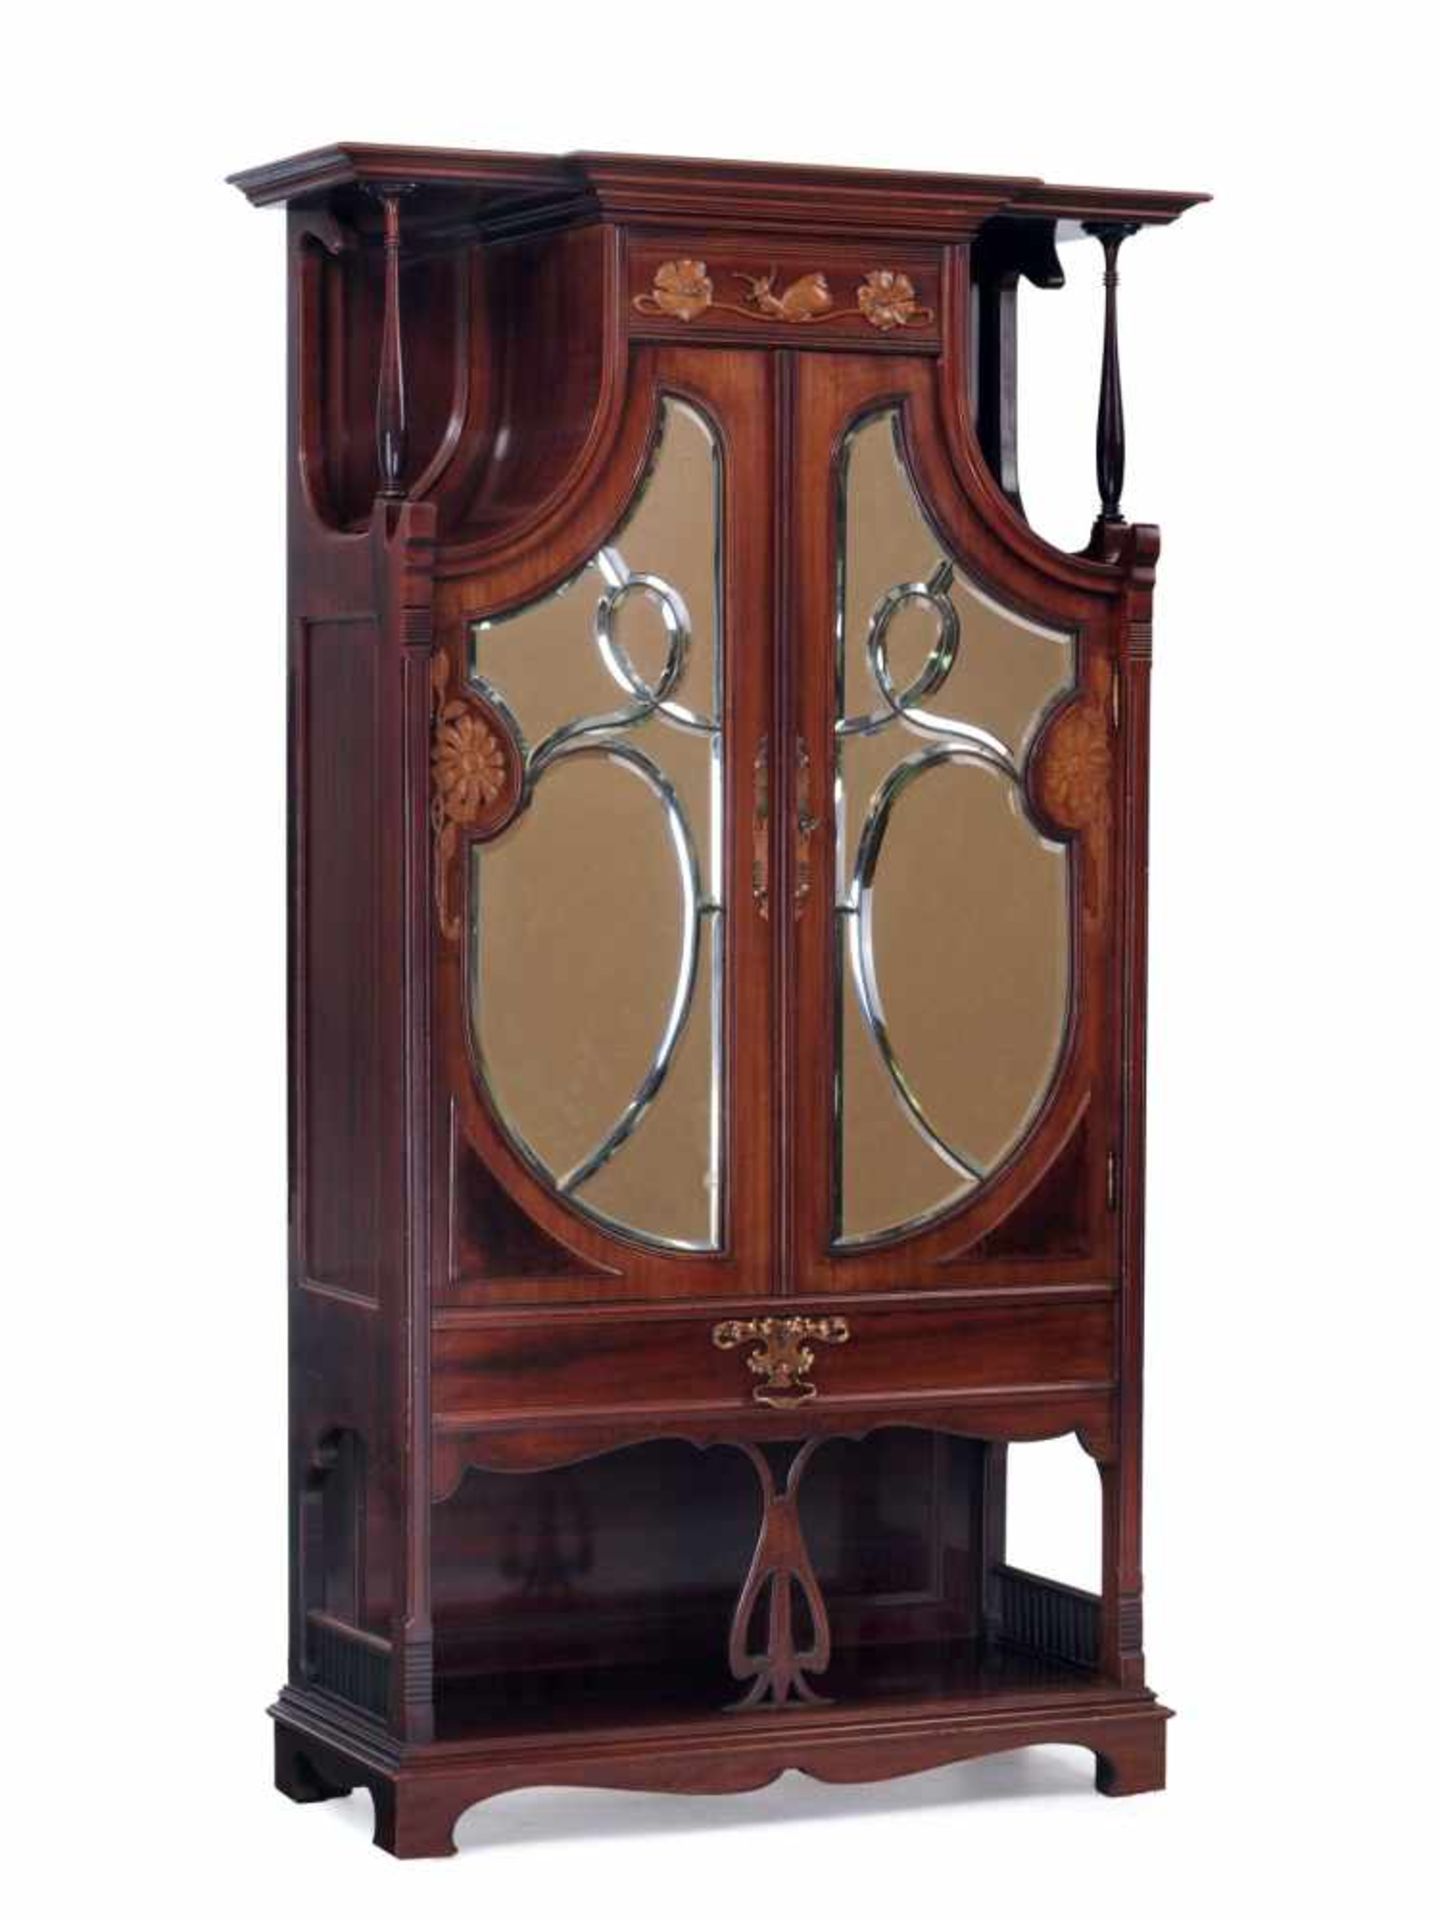 Filigraner Jugendstil-Spiegelschrank. Um 1900. Holz, mahagonifarben lackiert. Hochrechteckiger,